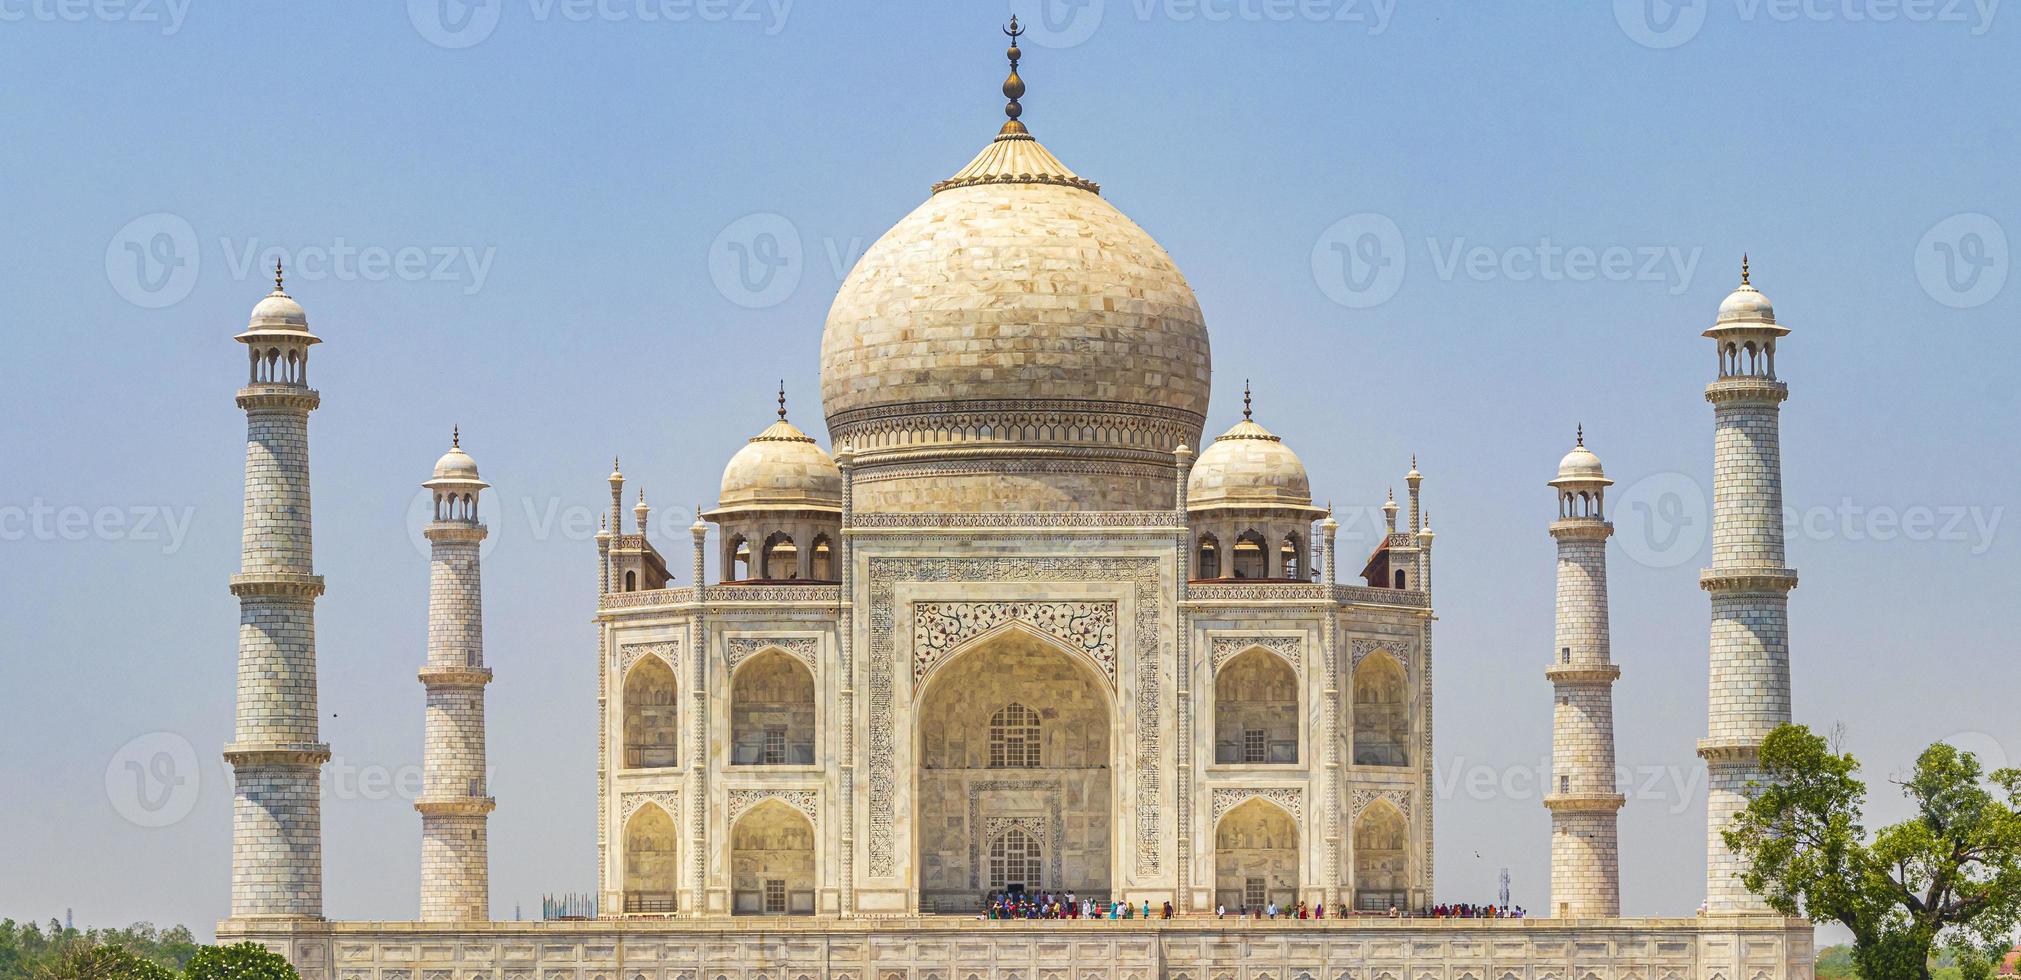 Taj Mahal-panorama in Agra India met verbazingwekkende symmetrische tuinen. foto